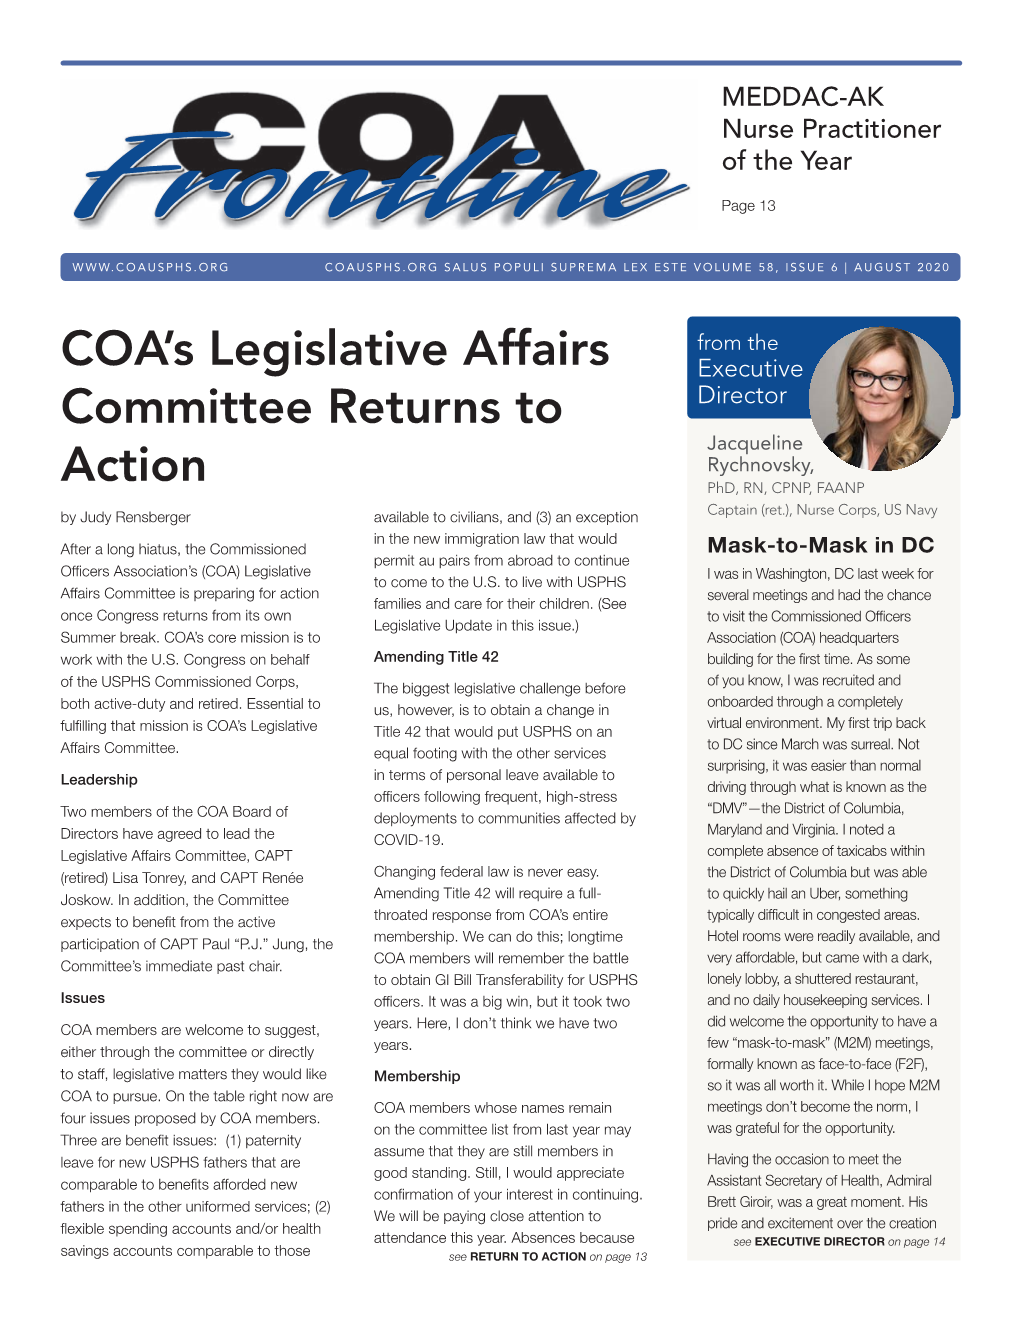 COA's Legislative Affairs Committee Returns to Action